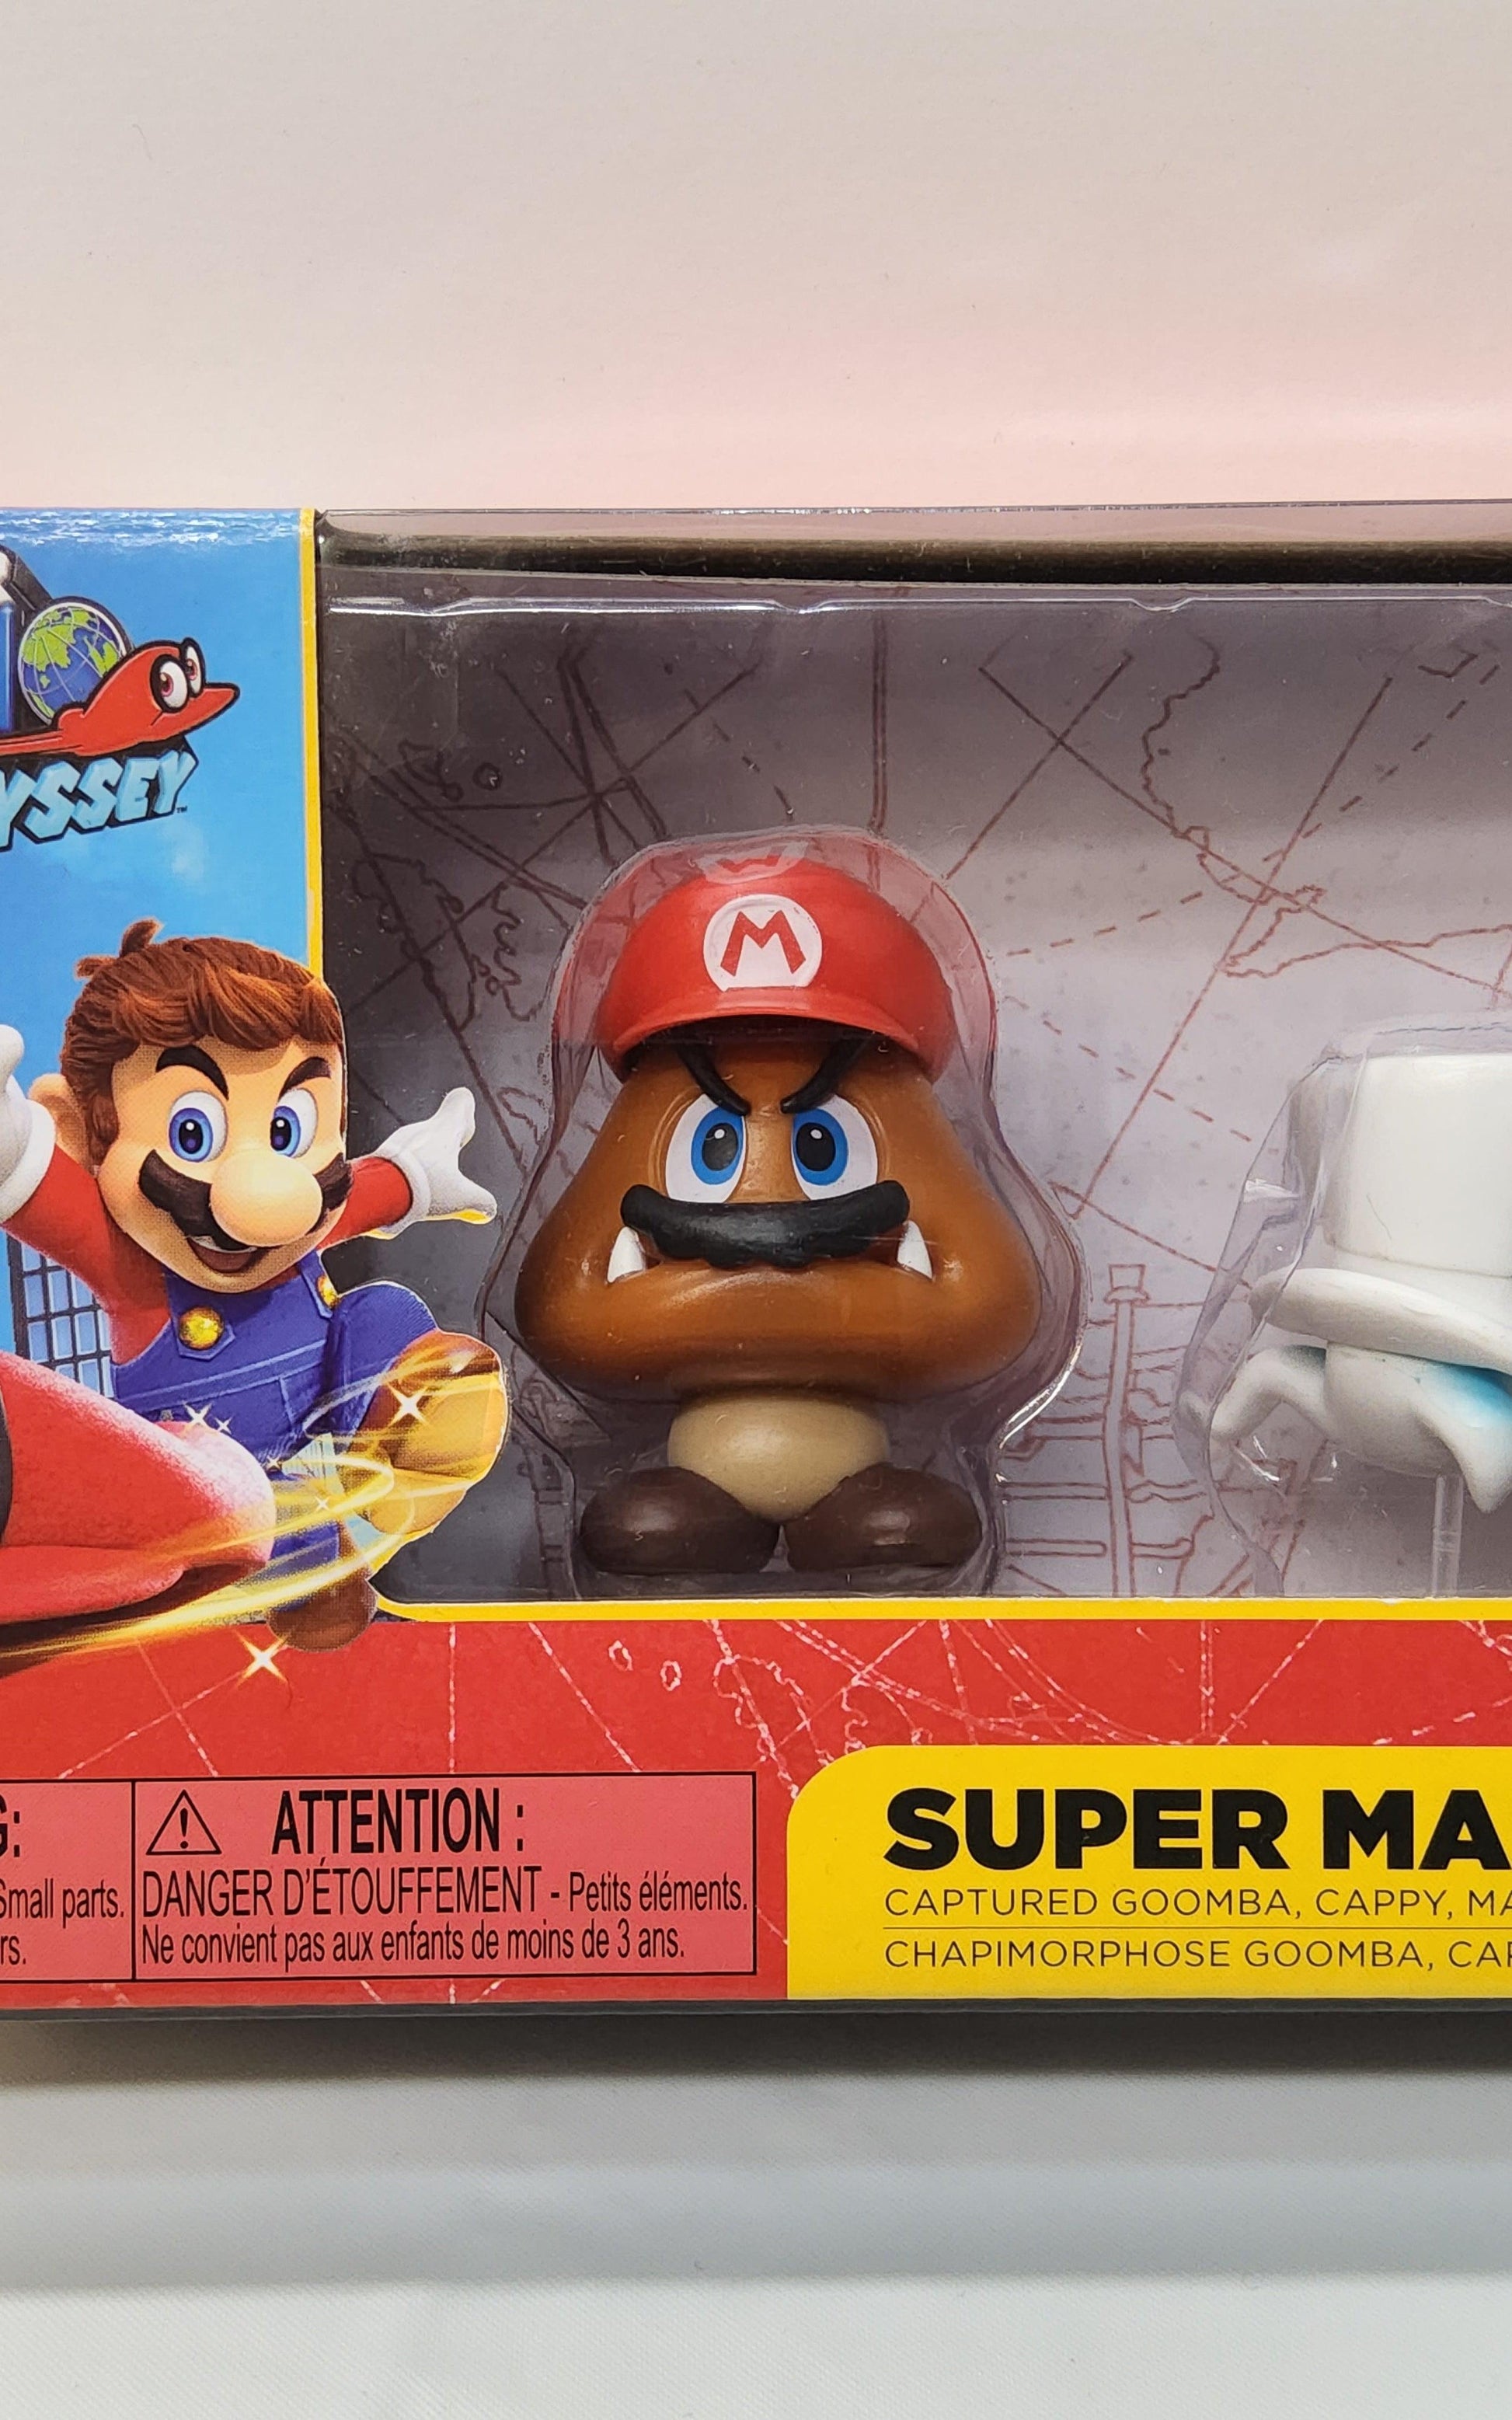 Super Mario Odyssey Captured Goomba, Cappy, Mario & Cappy, Chain Chomp